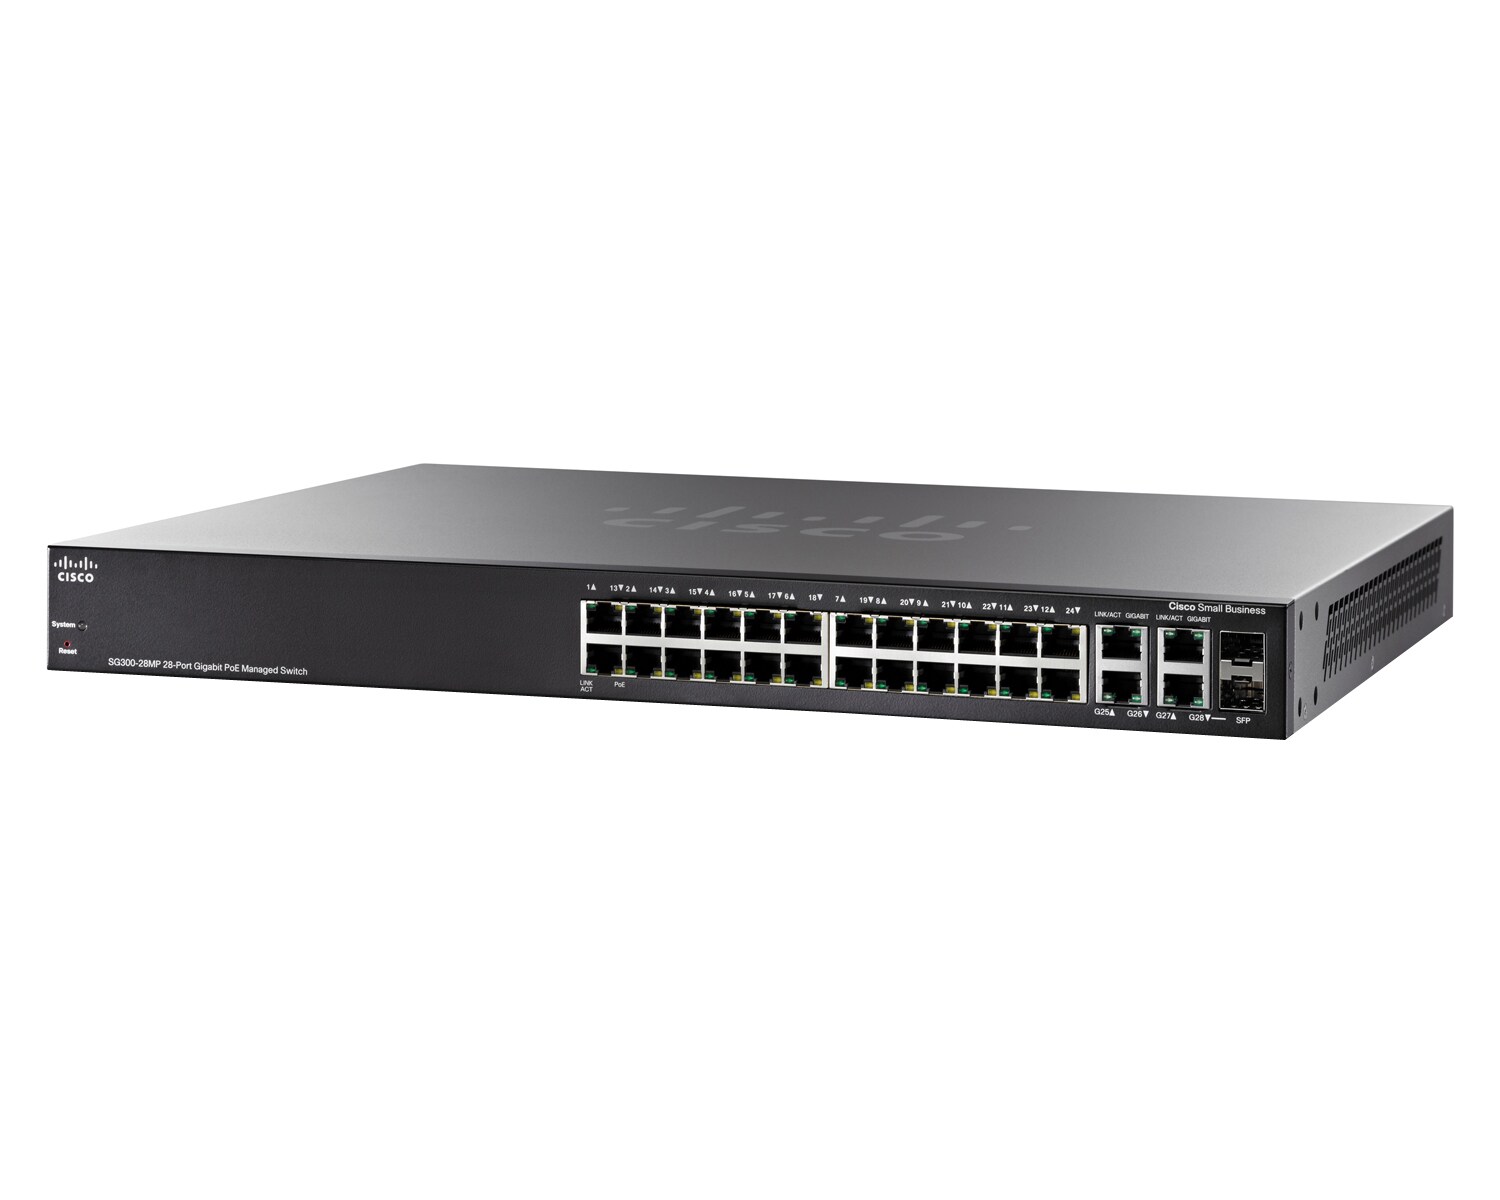 Cisco Small Business SG300-28MP 28-Port Gigabit Ethernet Switch